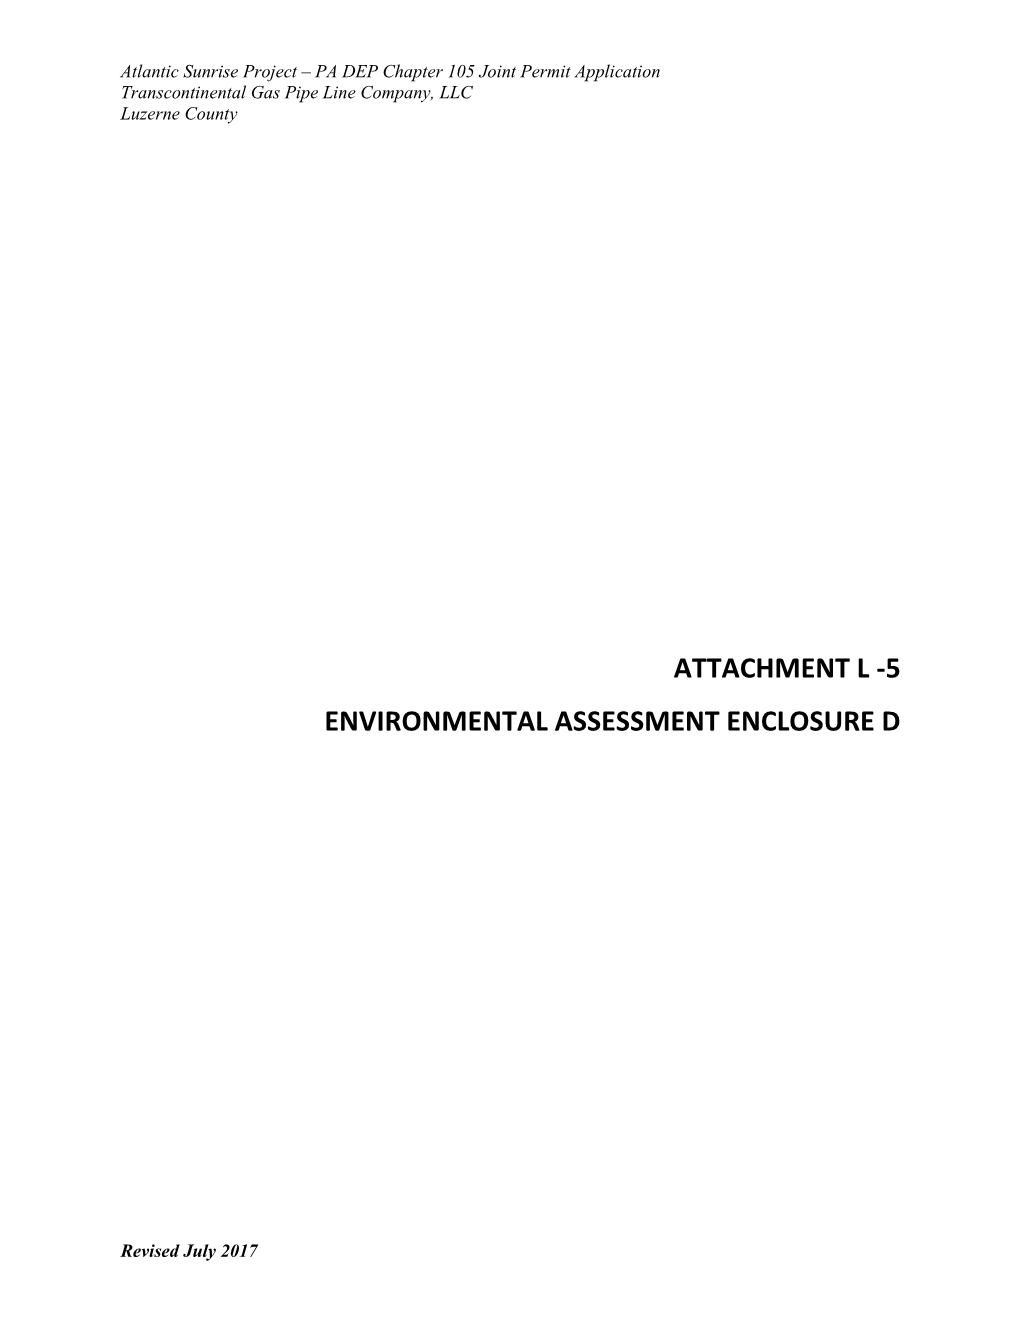 Attachment L -5 Environmental Assessment Enclosure D